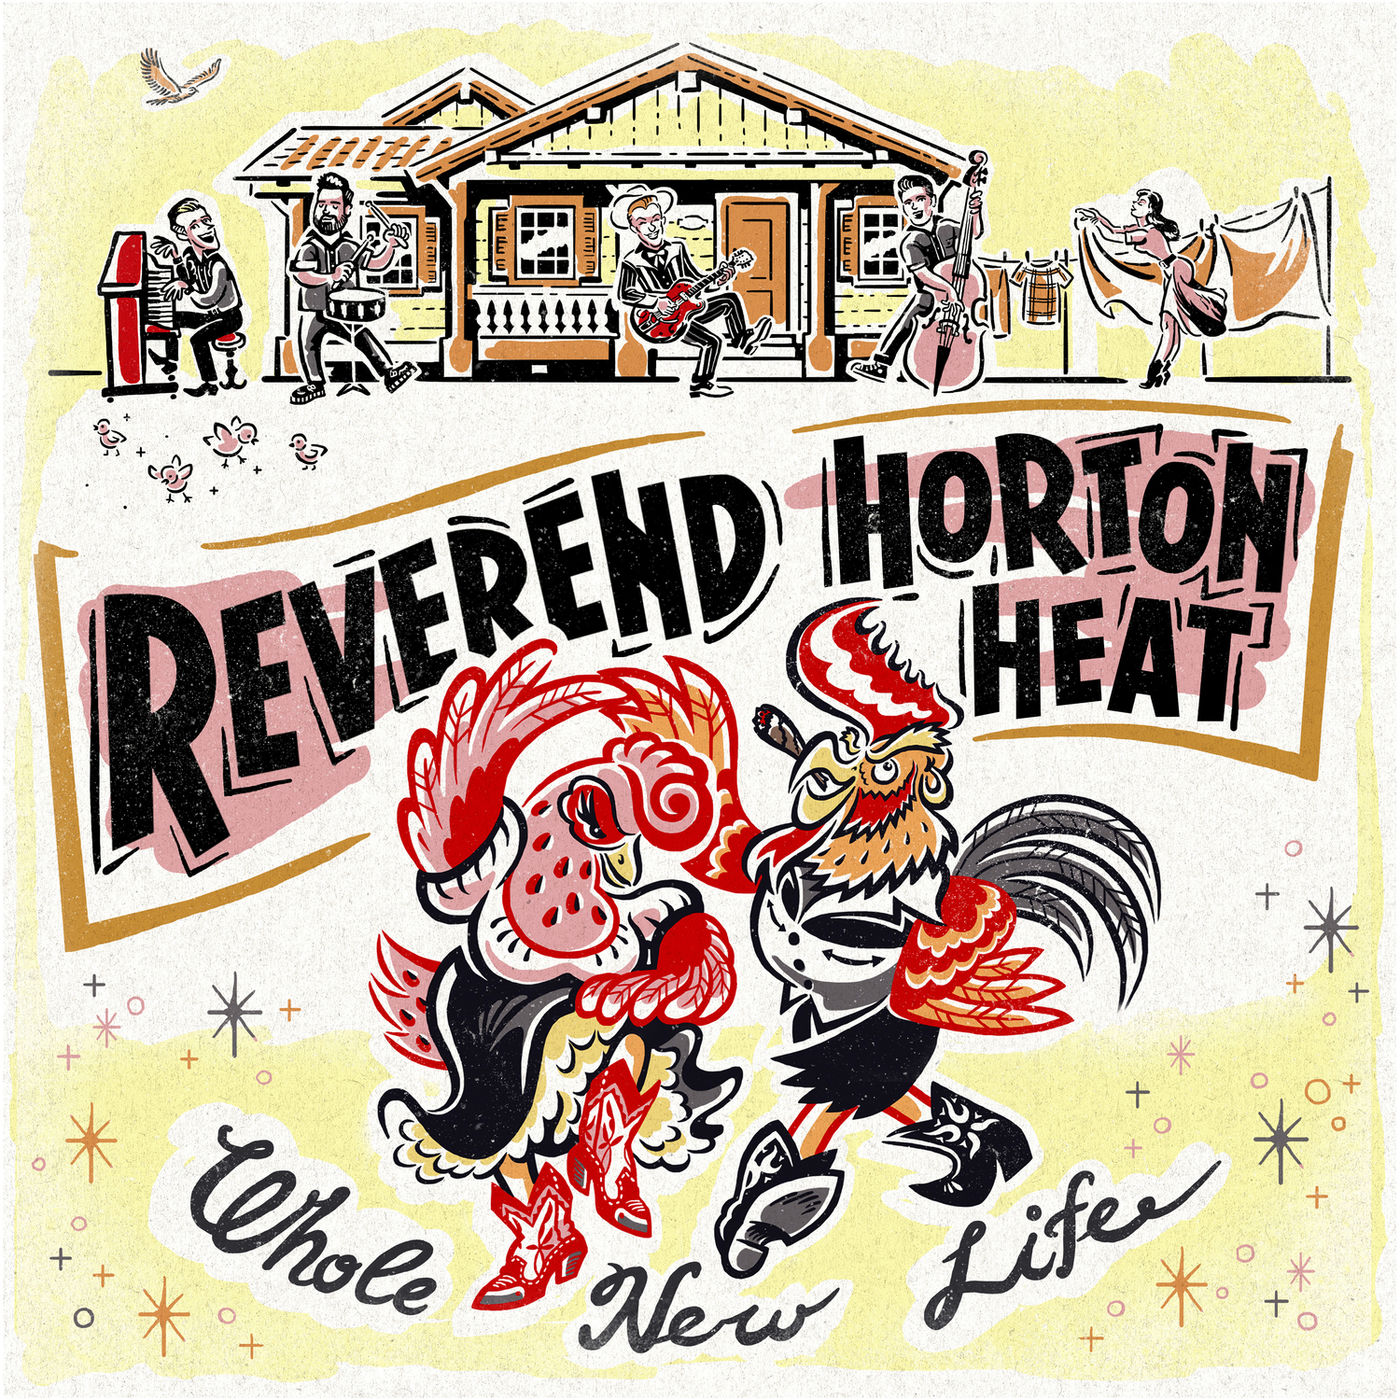 Reverend Horton Heat - Whole New Life (2018)